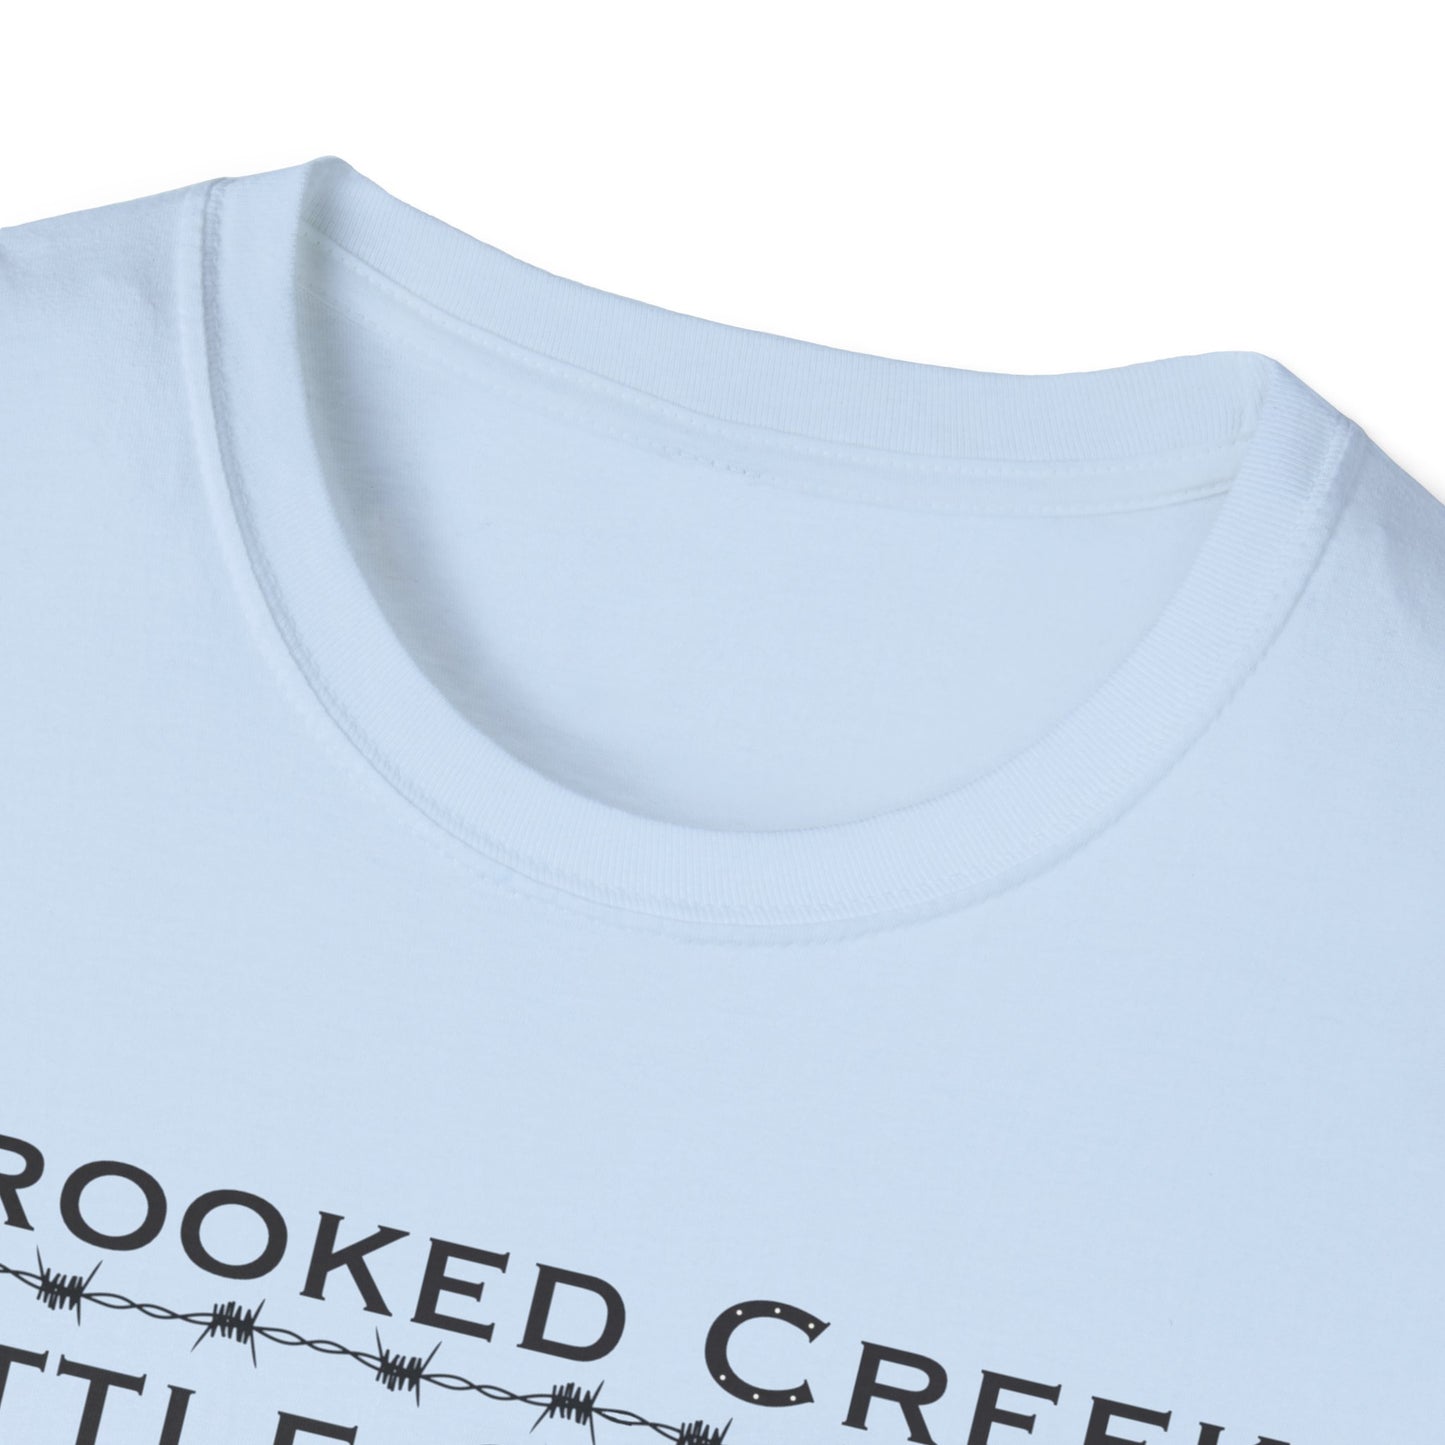 Classic Crooked Creek Cattle Company Shirt